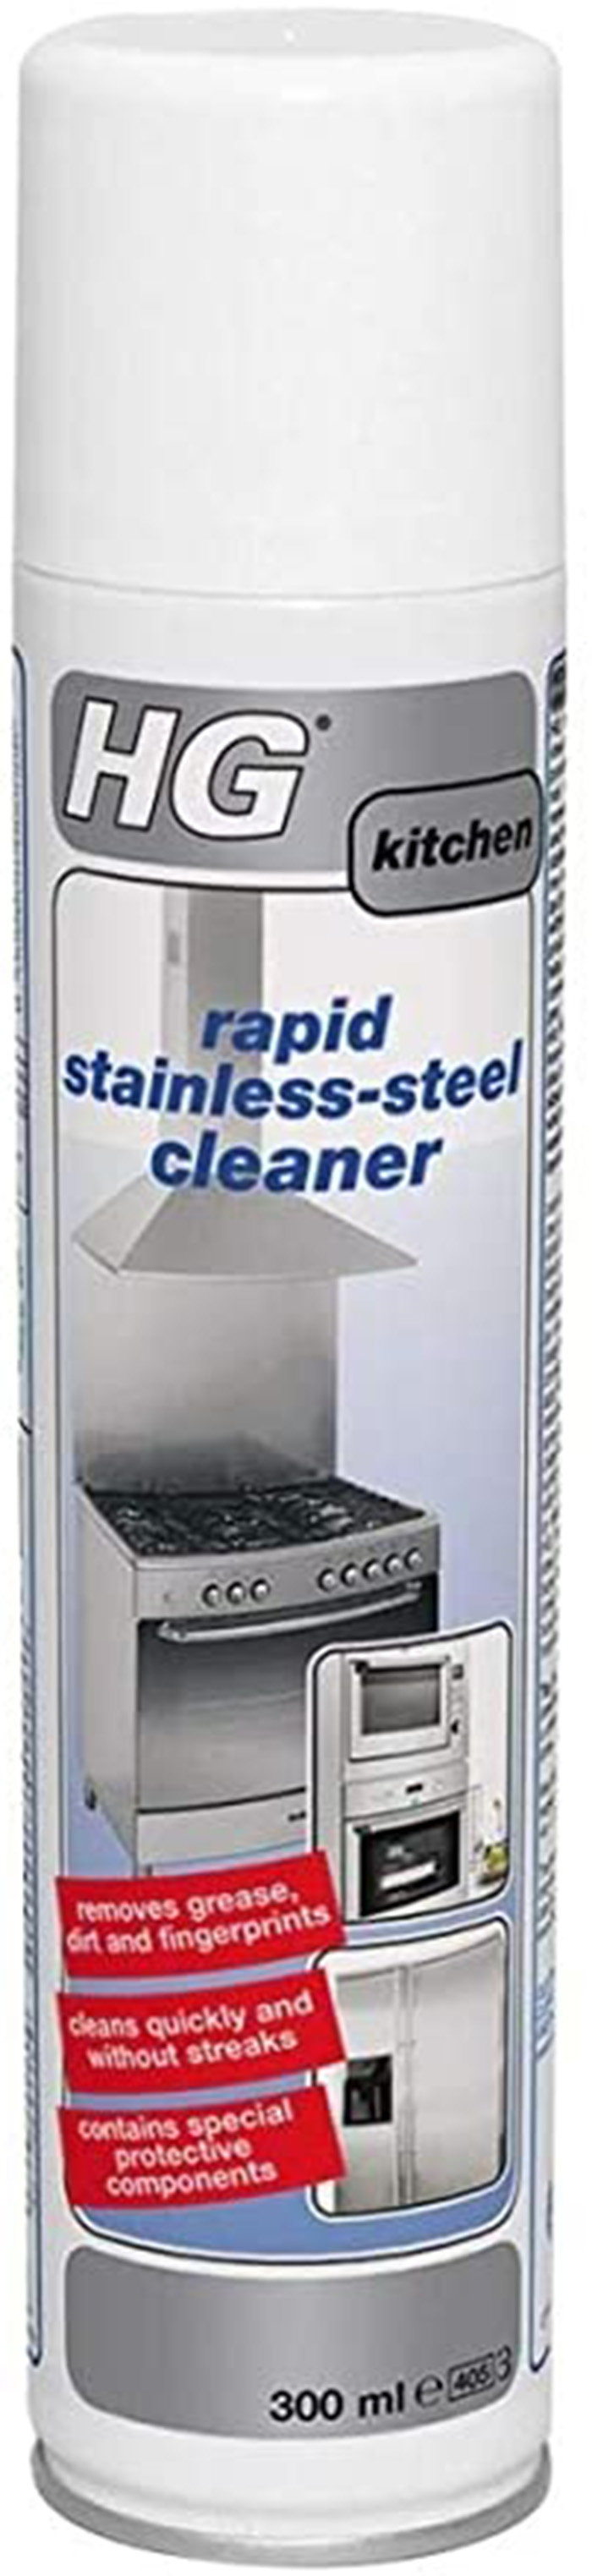 HG STAINLESS STEEL CLEANER 300ML